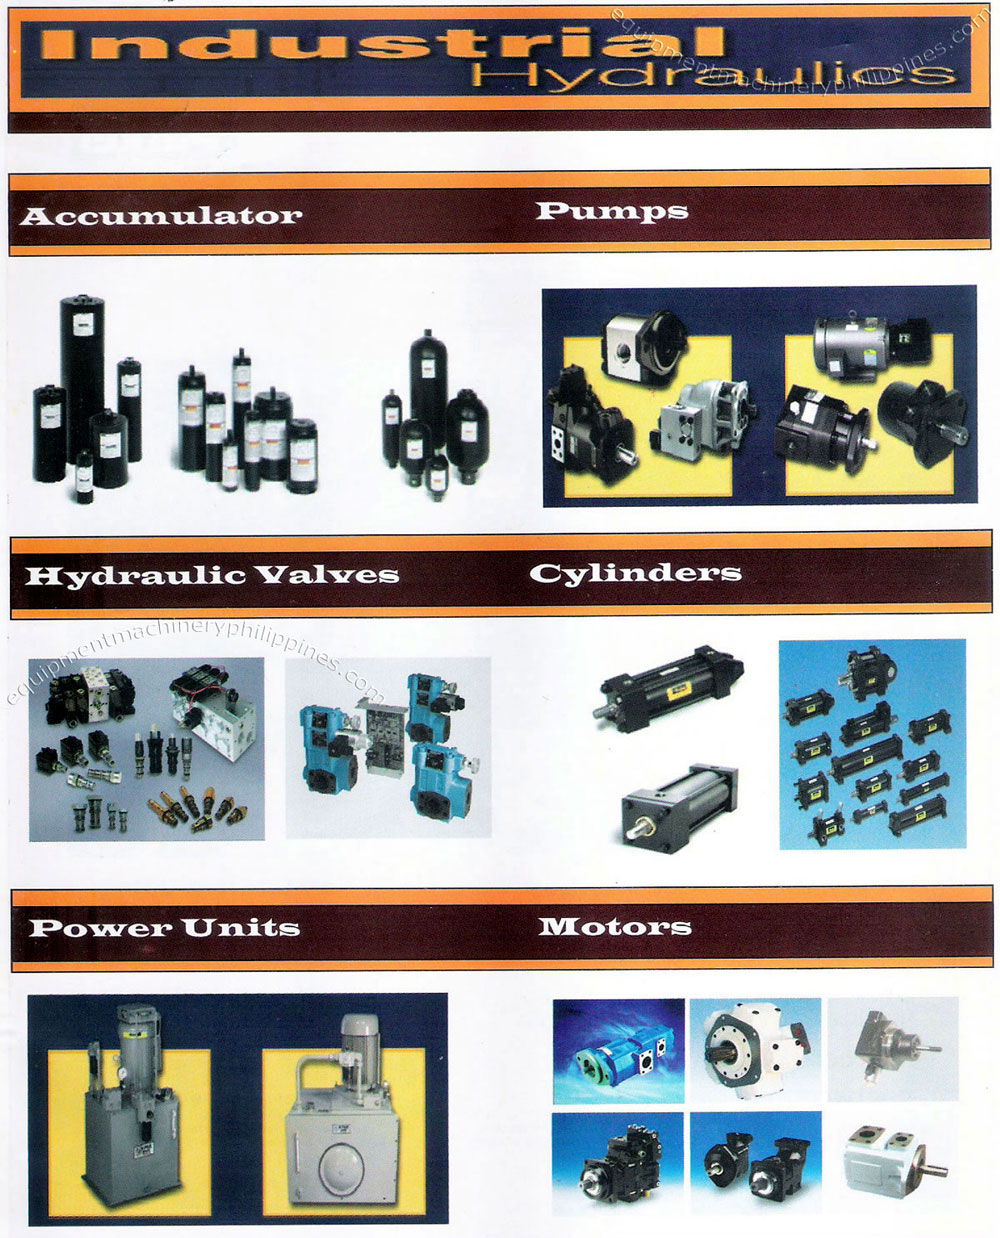 Industrial Hydraulics: Accumulators, Pumps, Hydraulic Valves, Cylinders, Power Units, Motors